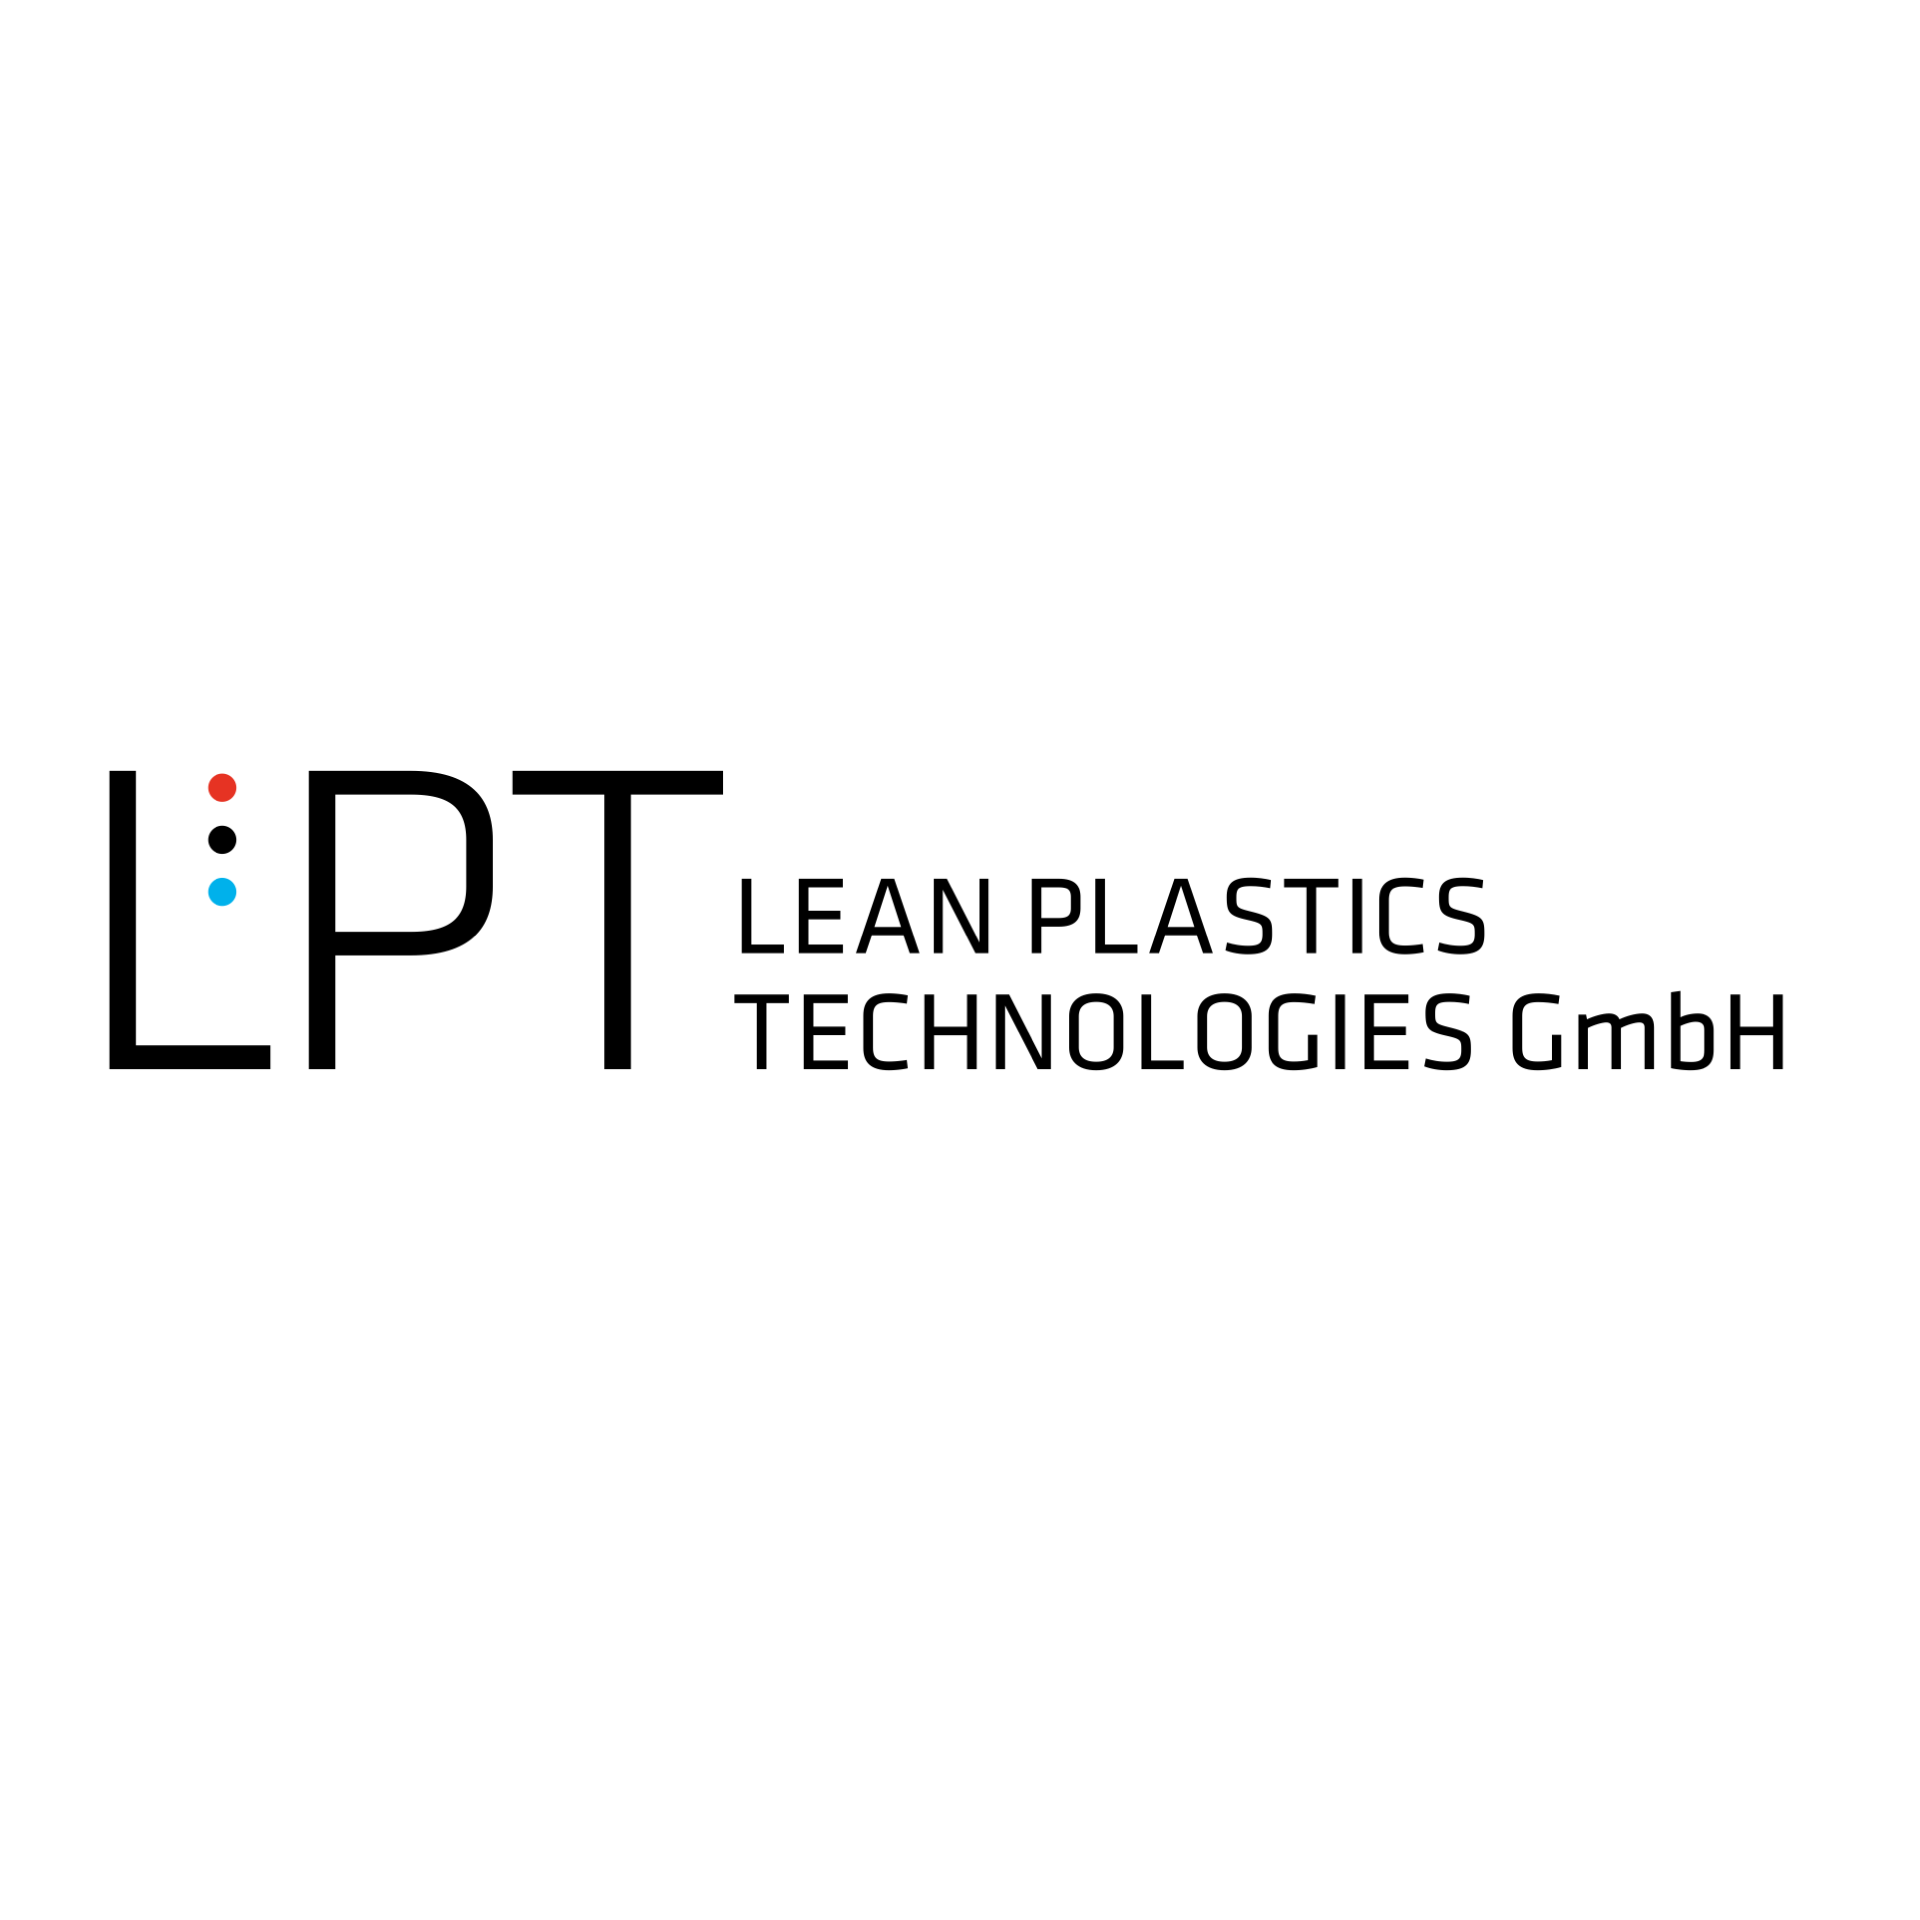 Lean Plastics Technologies GmbH